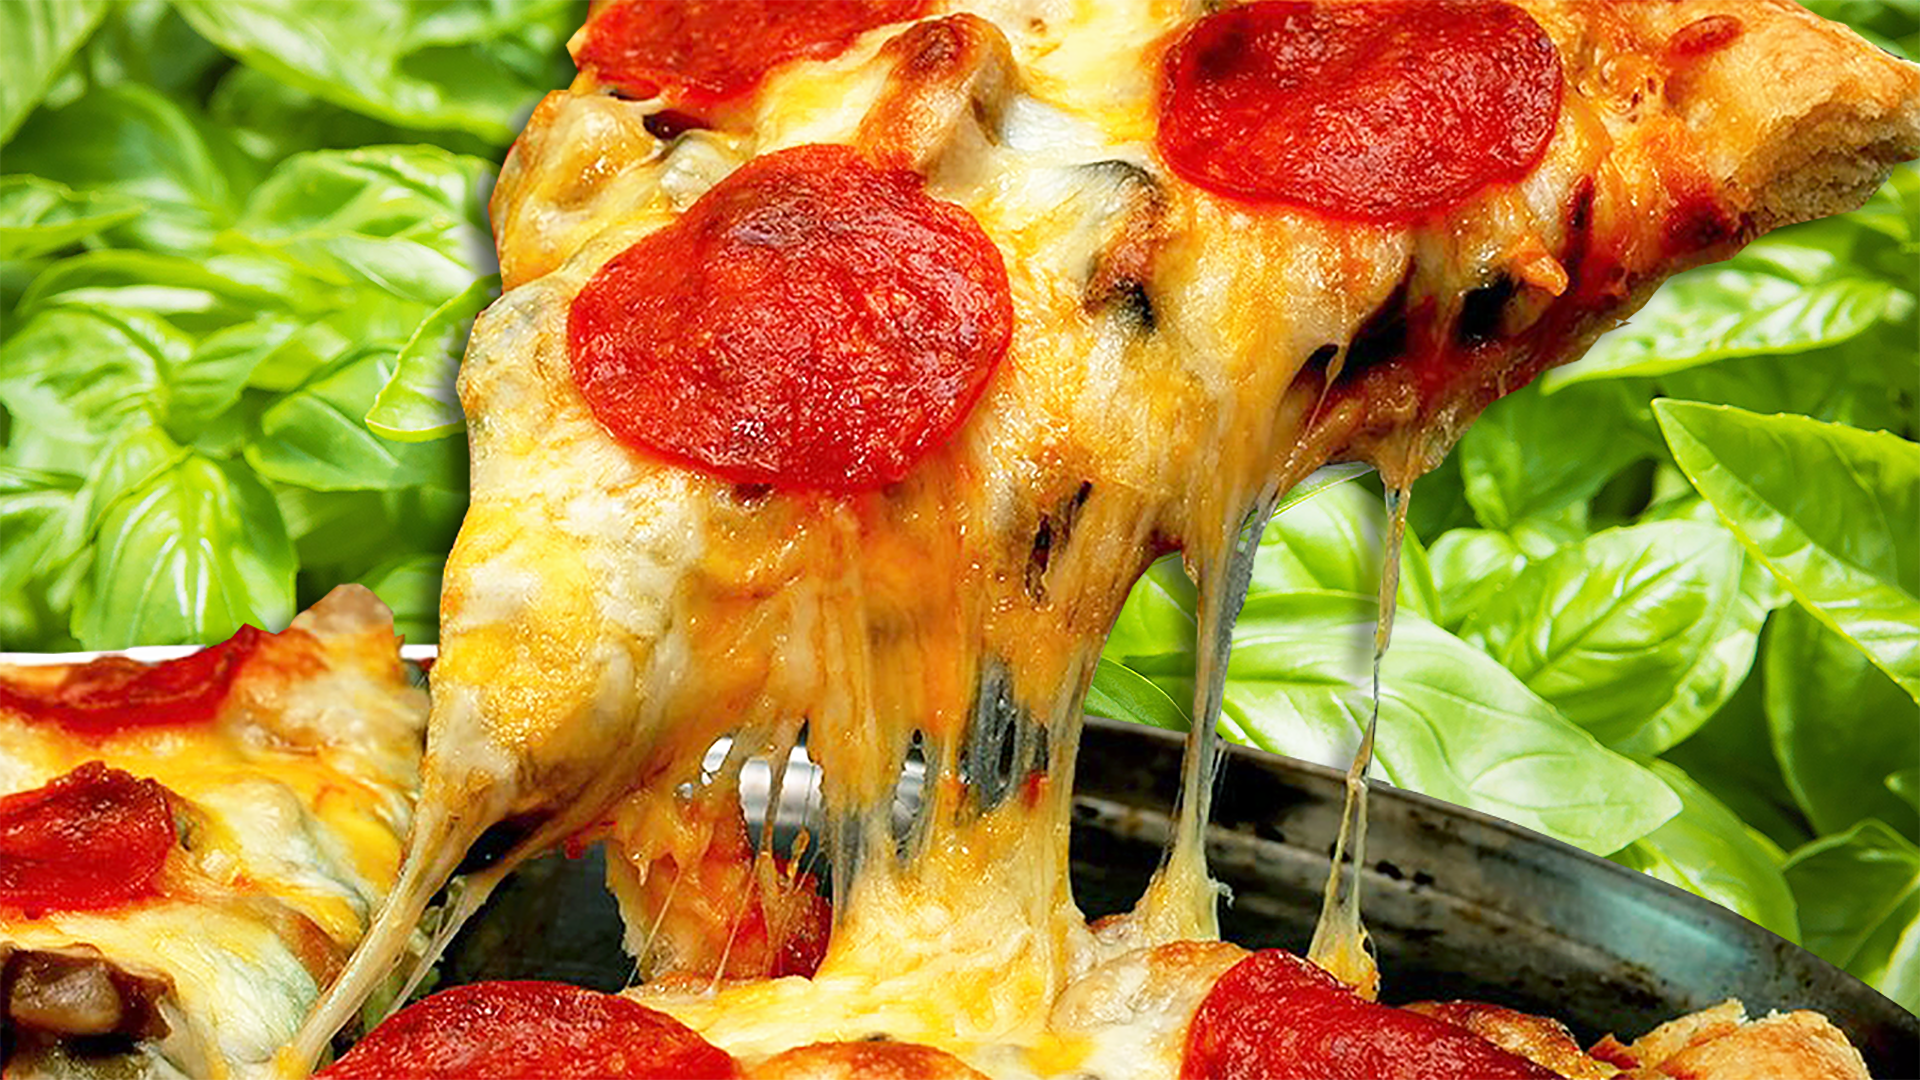 Homemade Salami Pizza